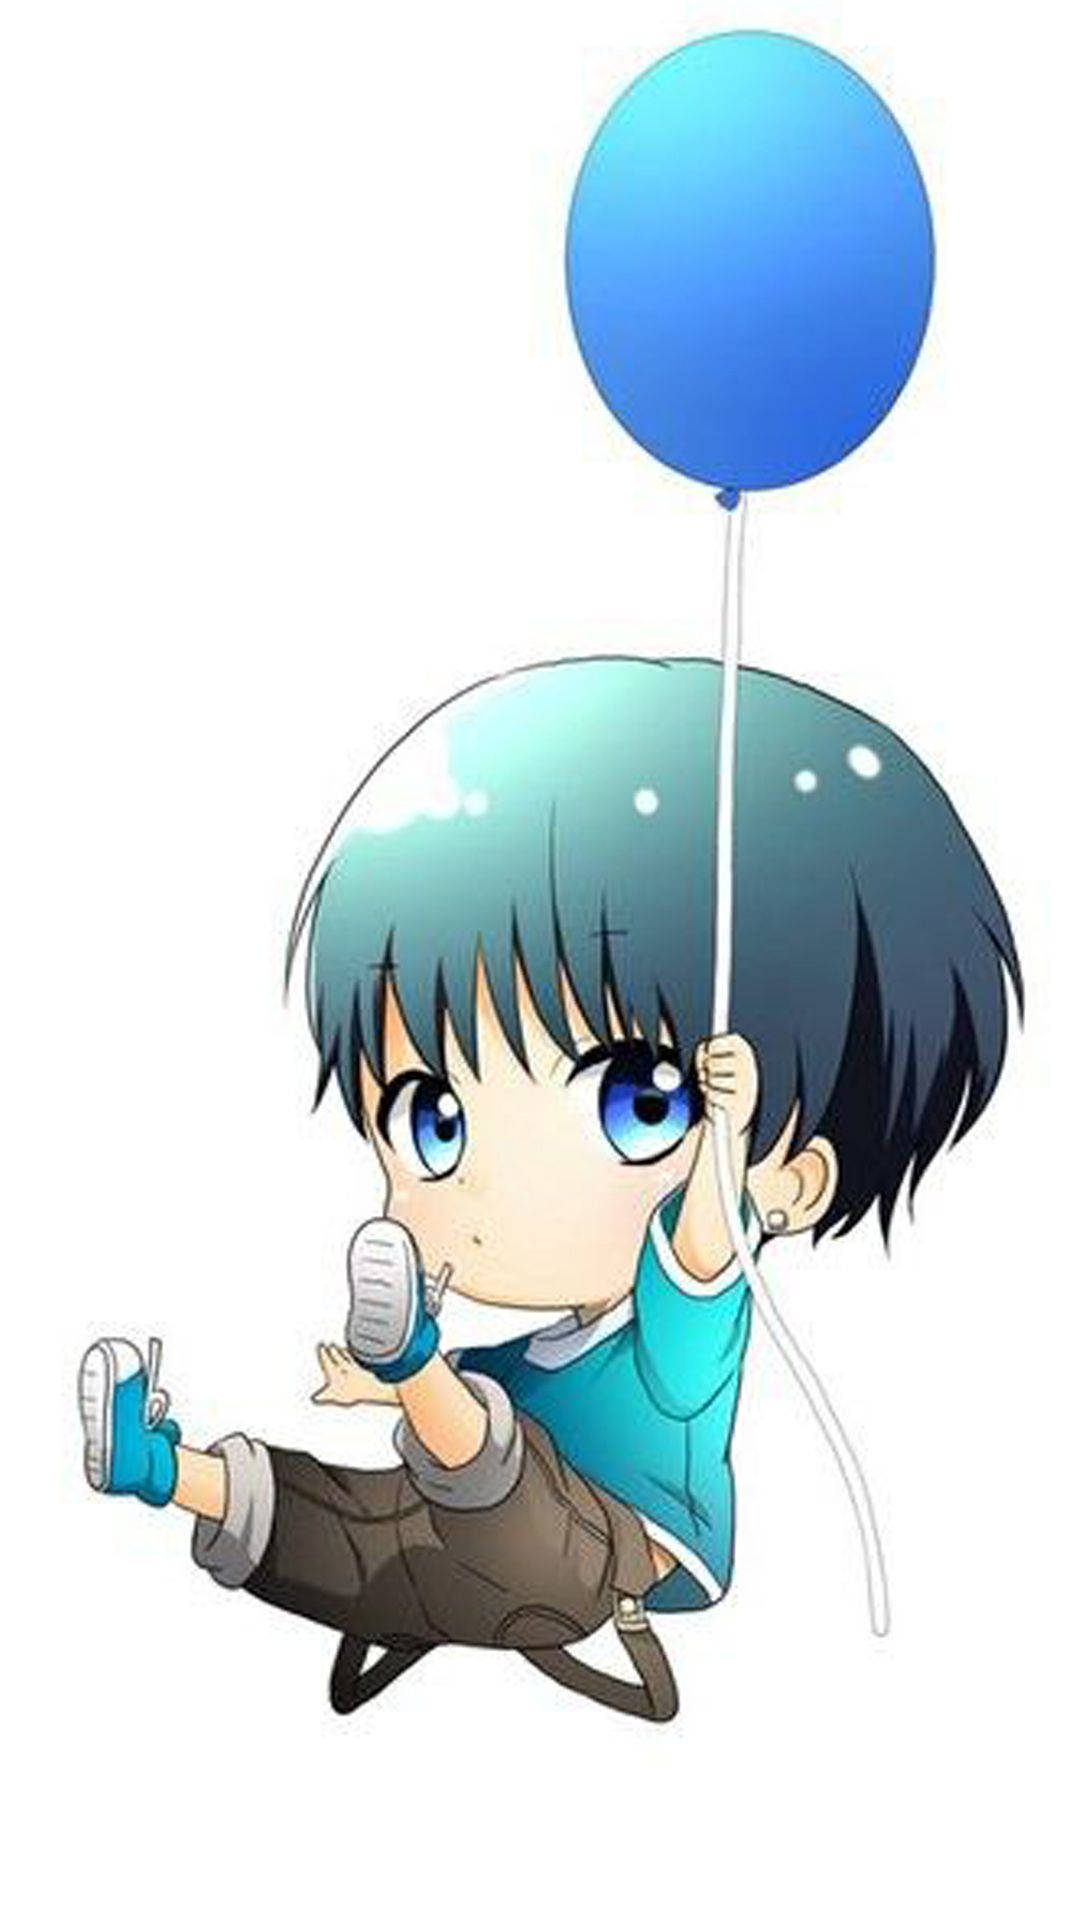 Chibi Cute Boy Cartoon With A Balloon Background